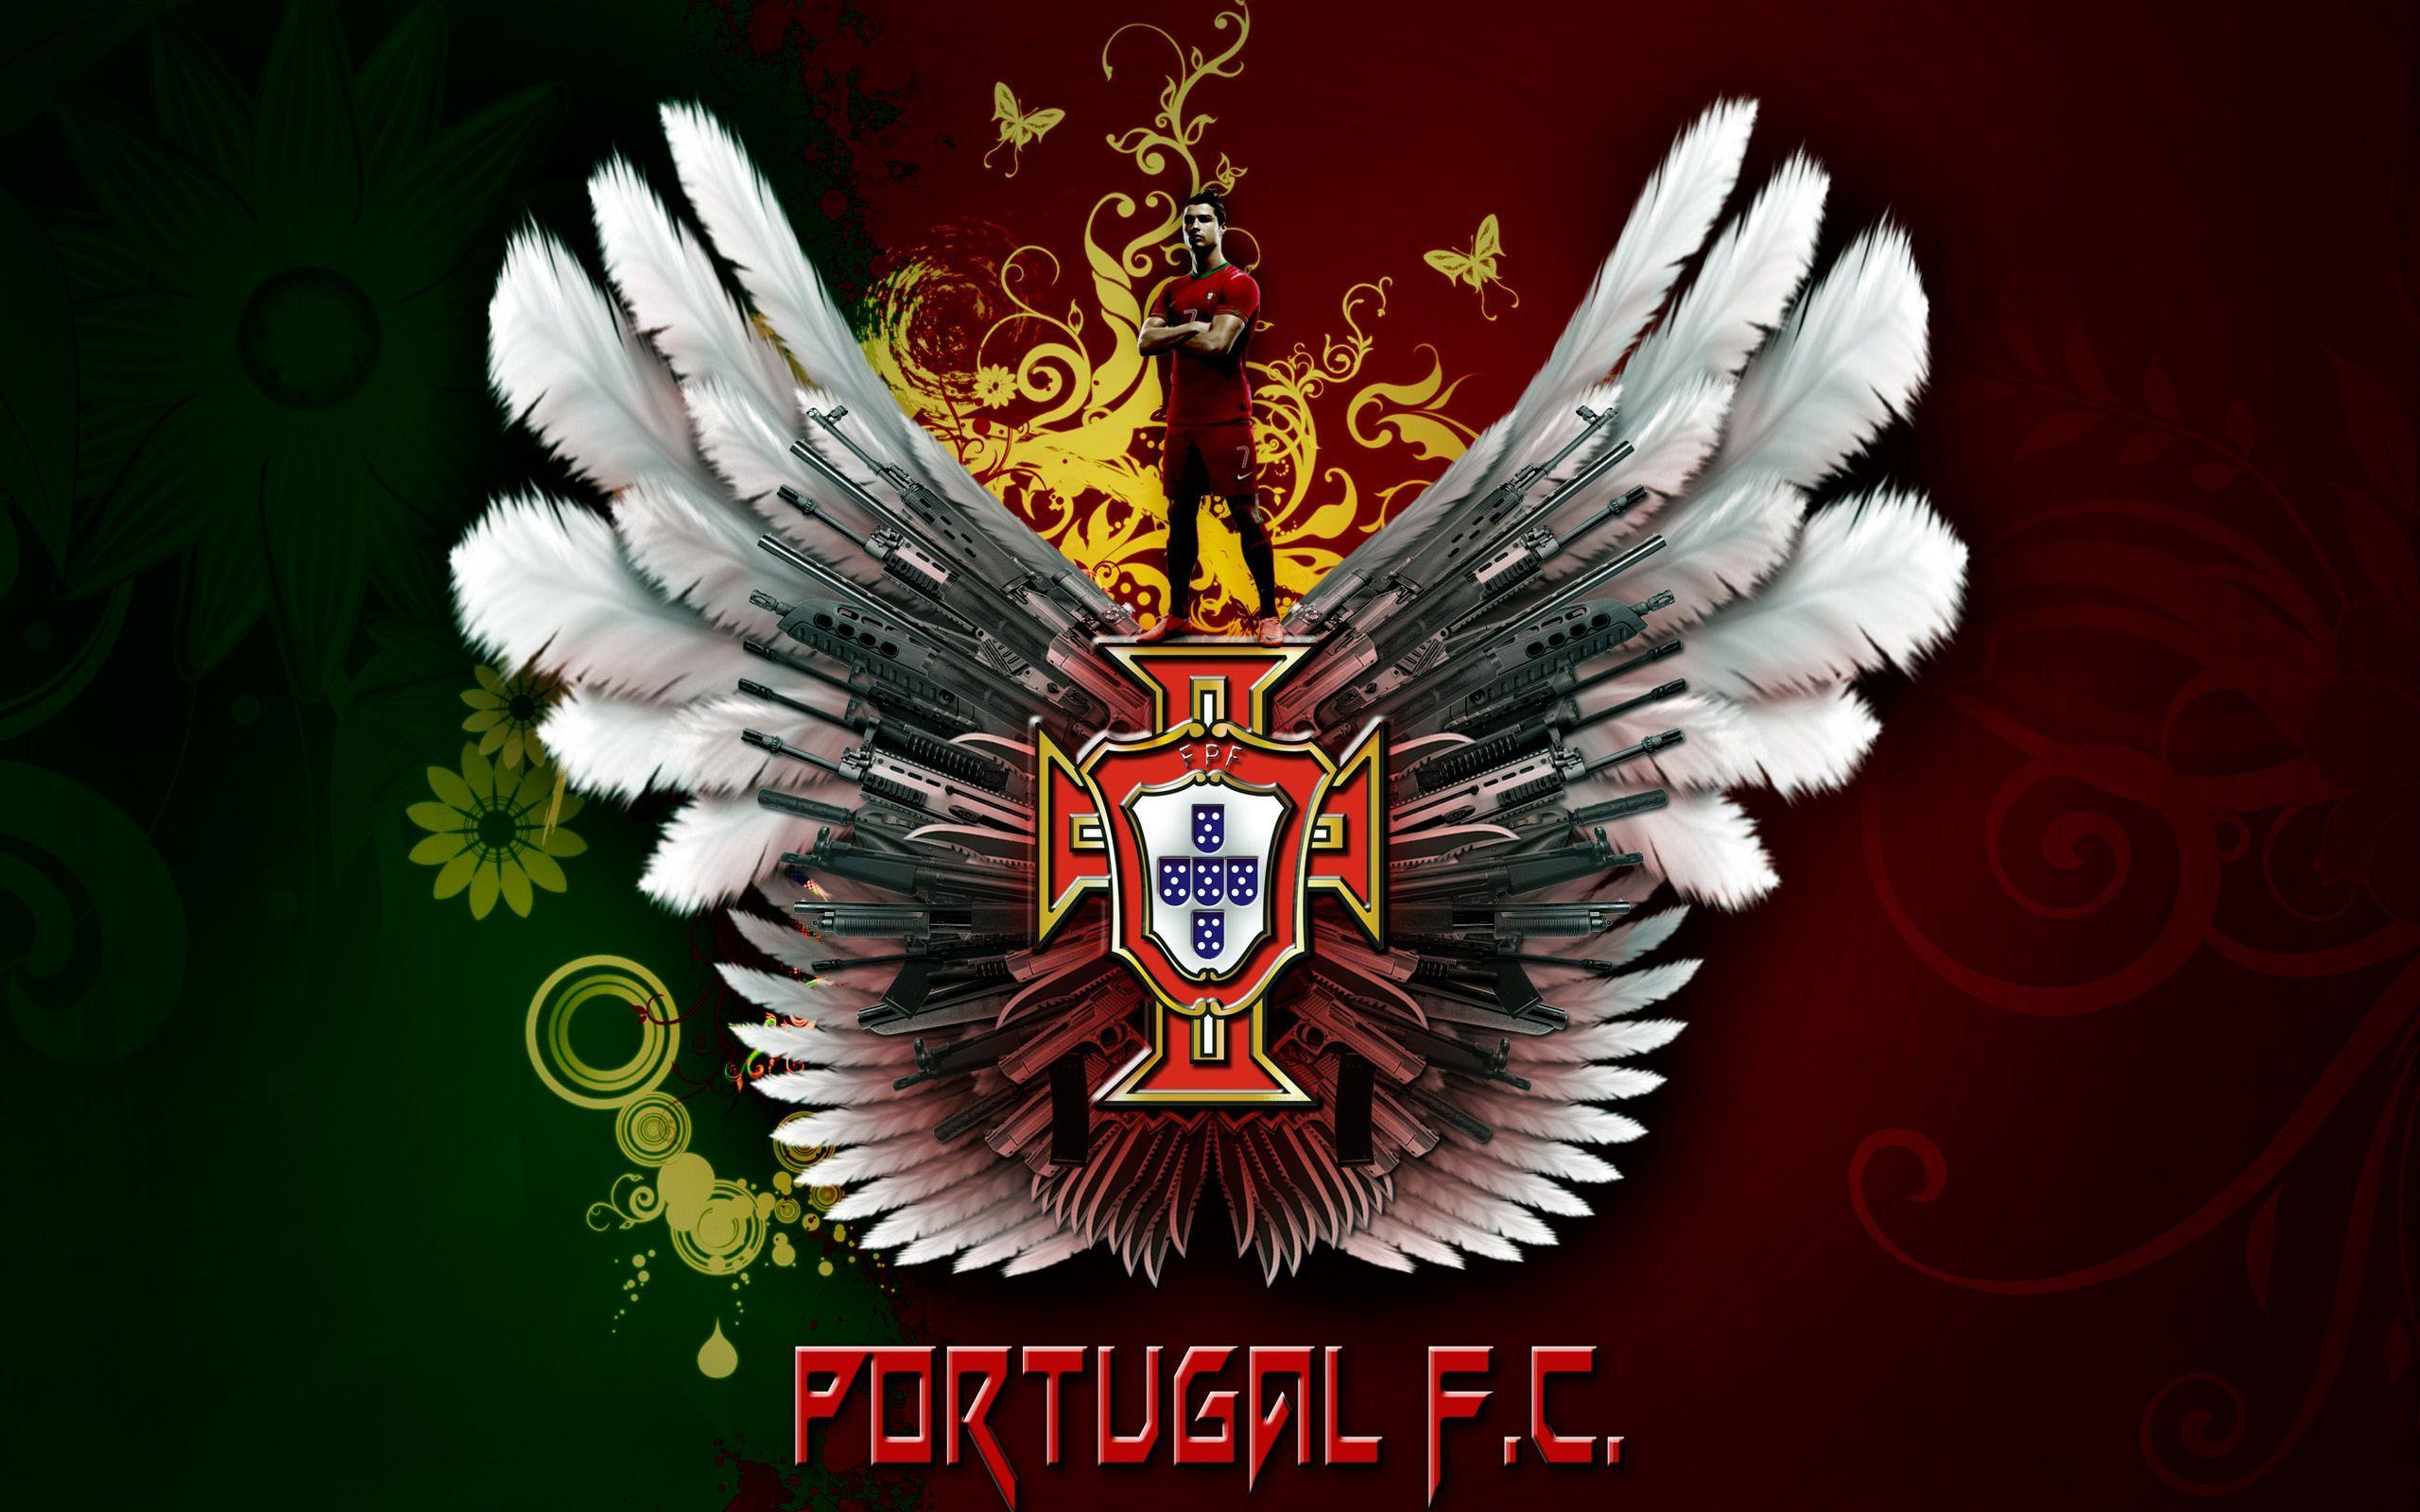 Portugal Football Wallpaper. Football wallpaper, Ronaldo football player, Portugal national football team